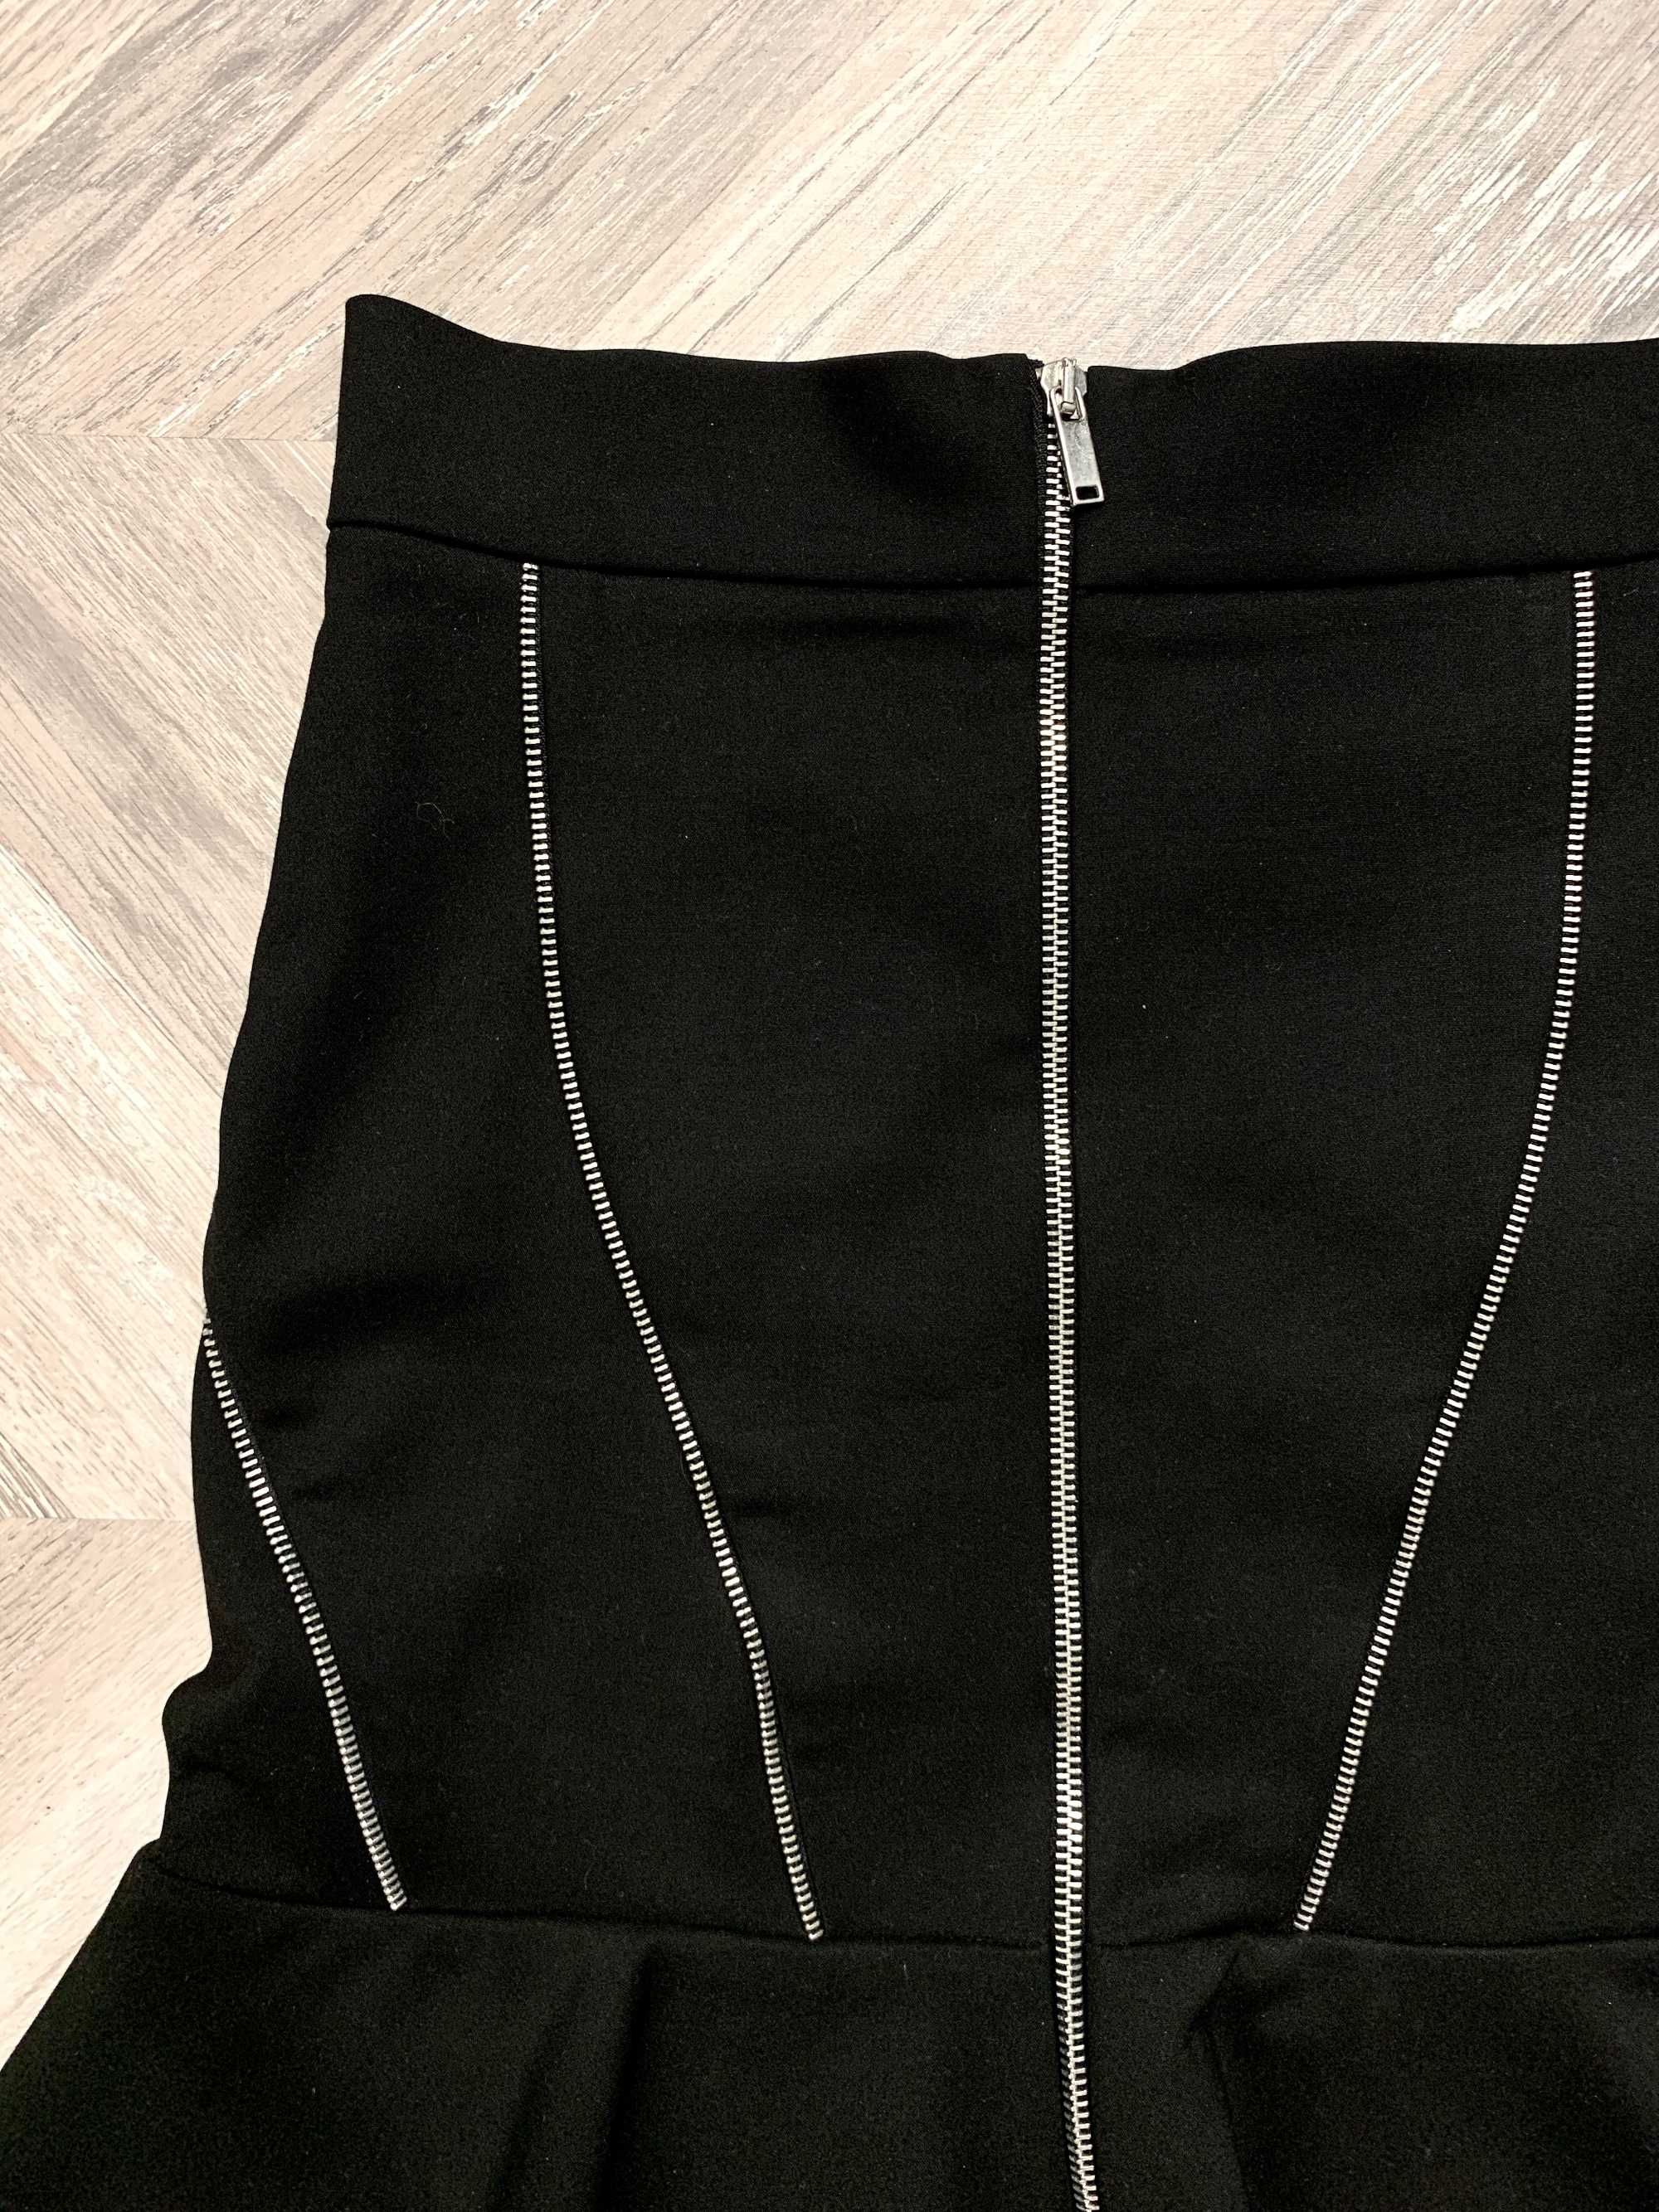 ZARA spódnica czarna mini midi srebrne suwaki falbana rozmiar XS